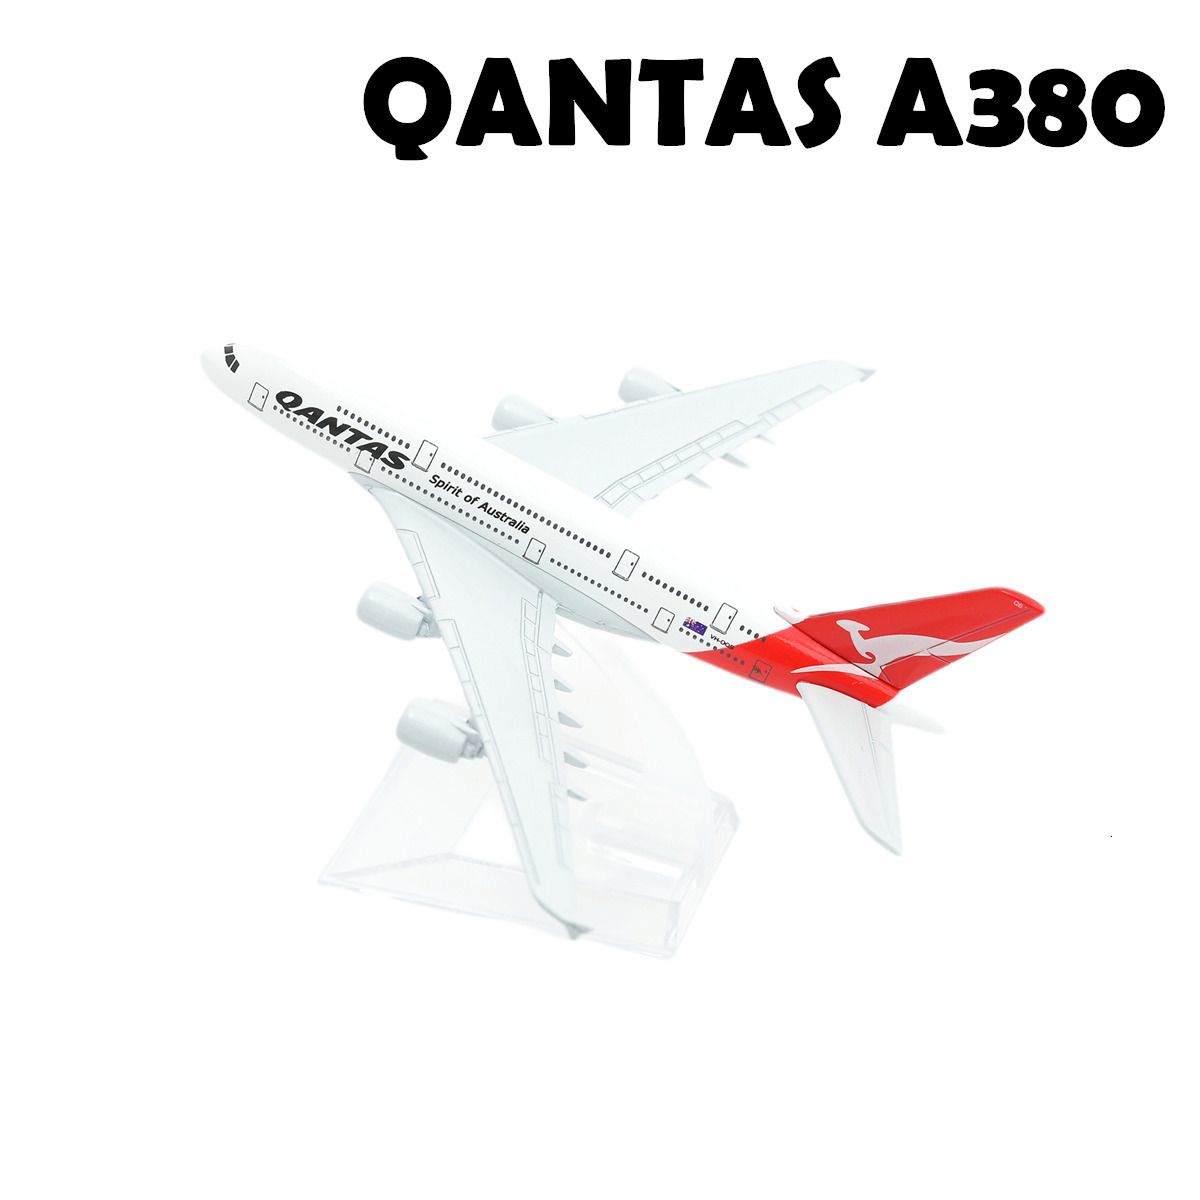 6. Qantas A380